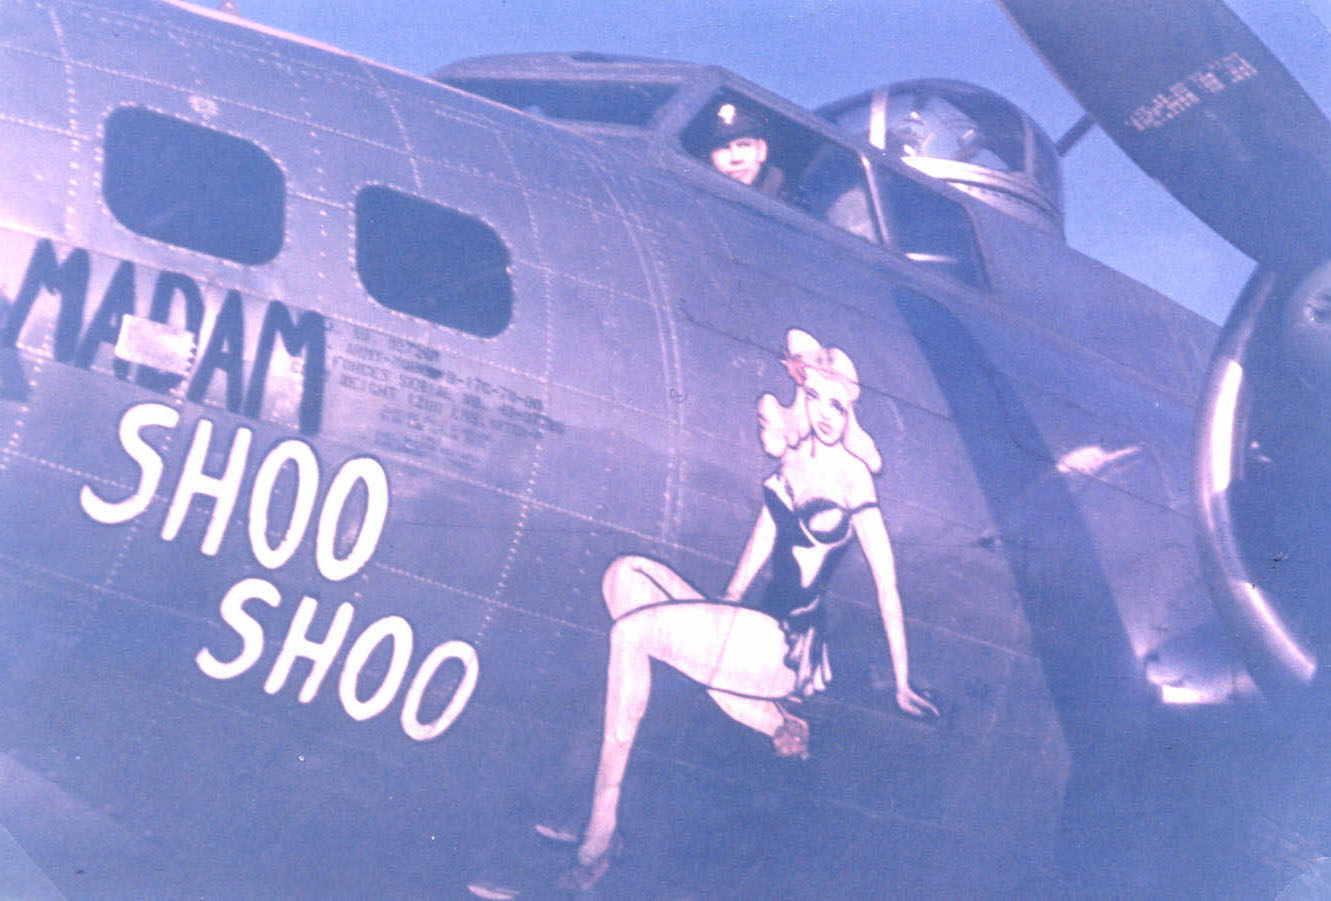 B-17 #43-37786 / Madam Shoo Shoo